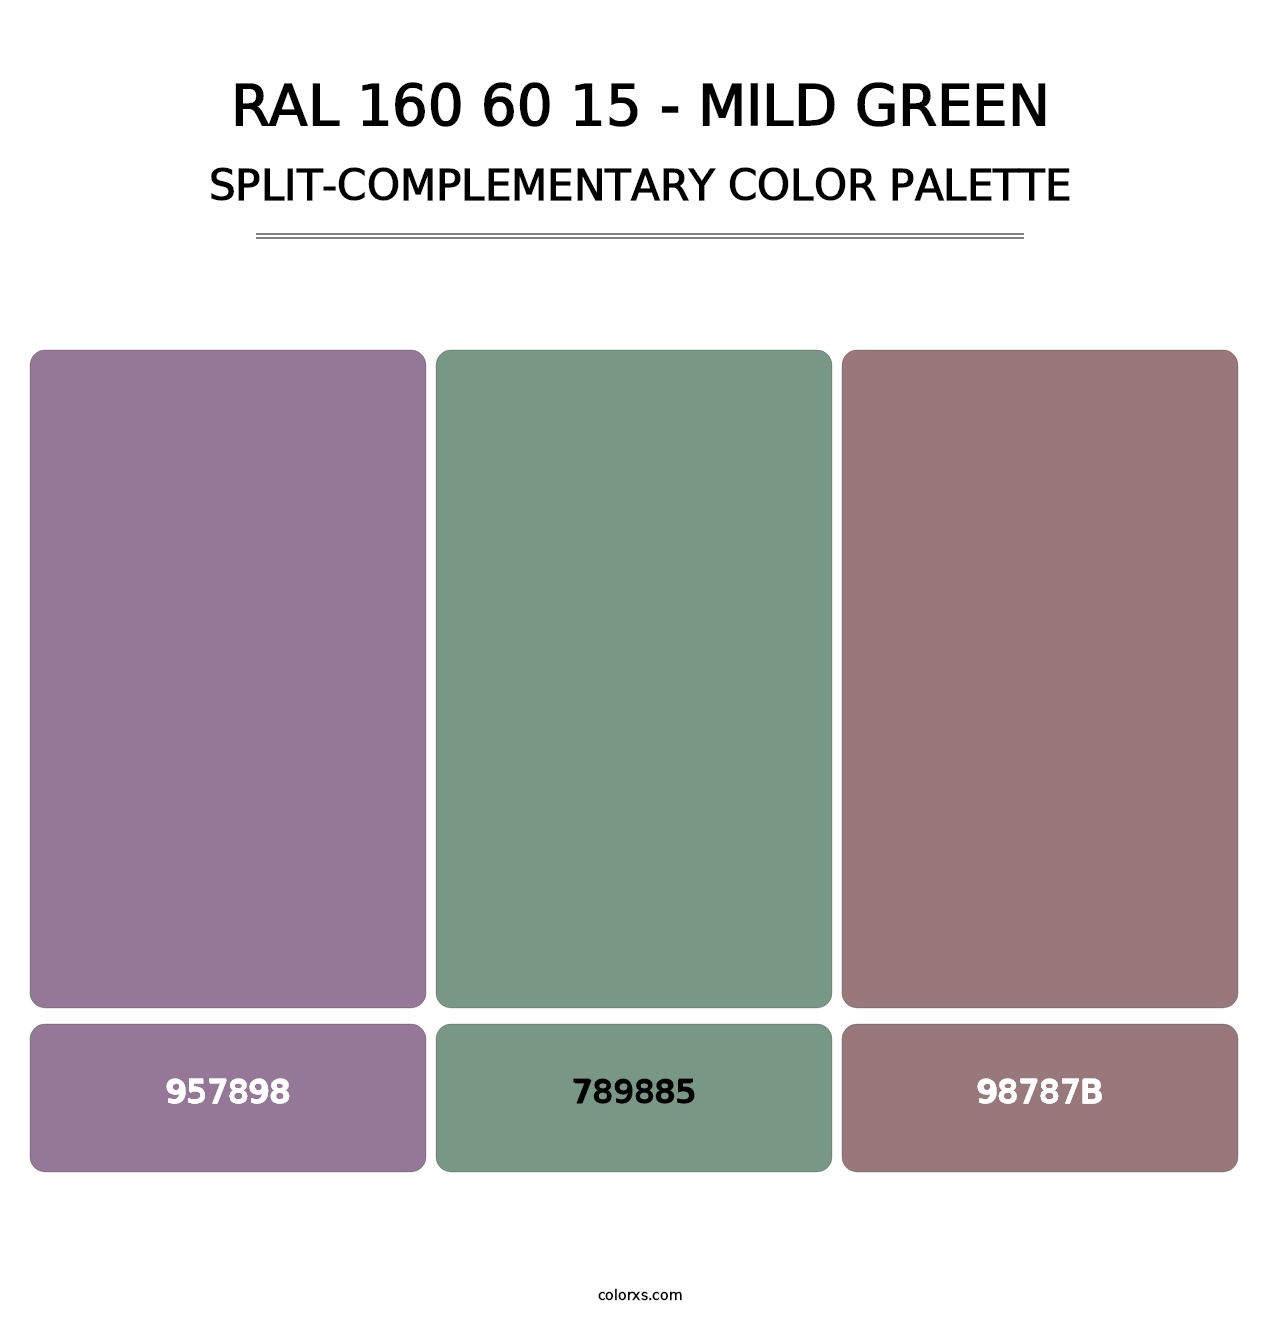 RAL 160 60 15 - Mild Green - Split-Complementary Color Palette